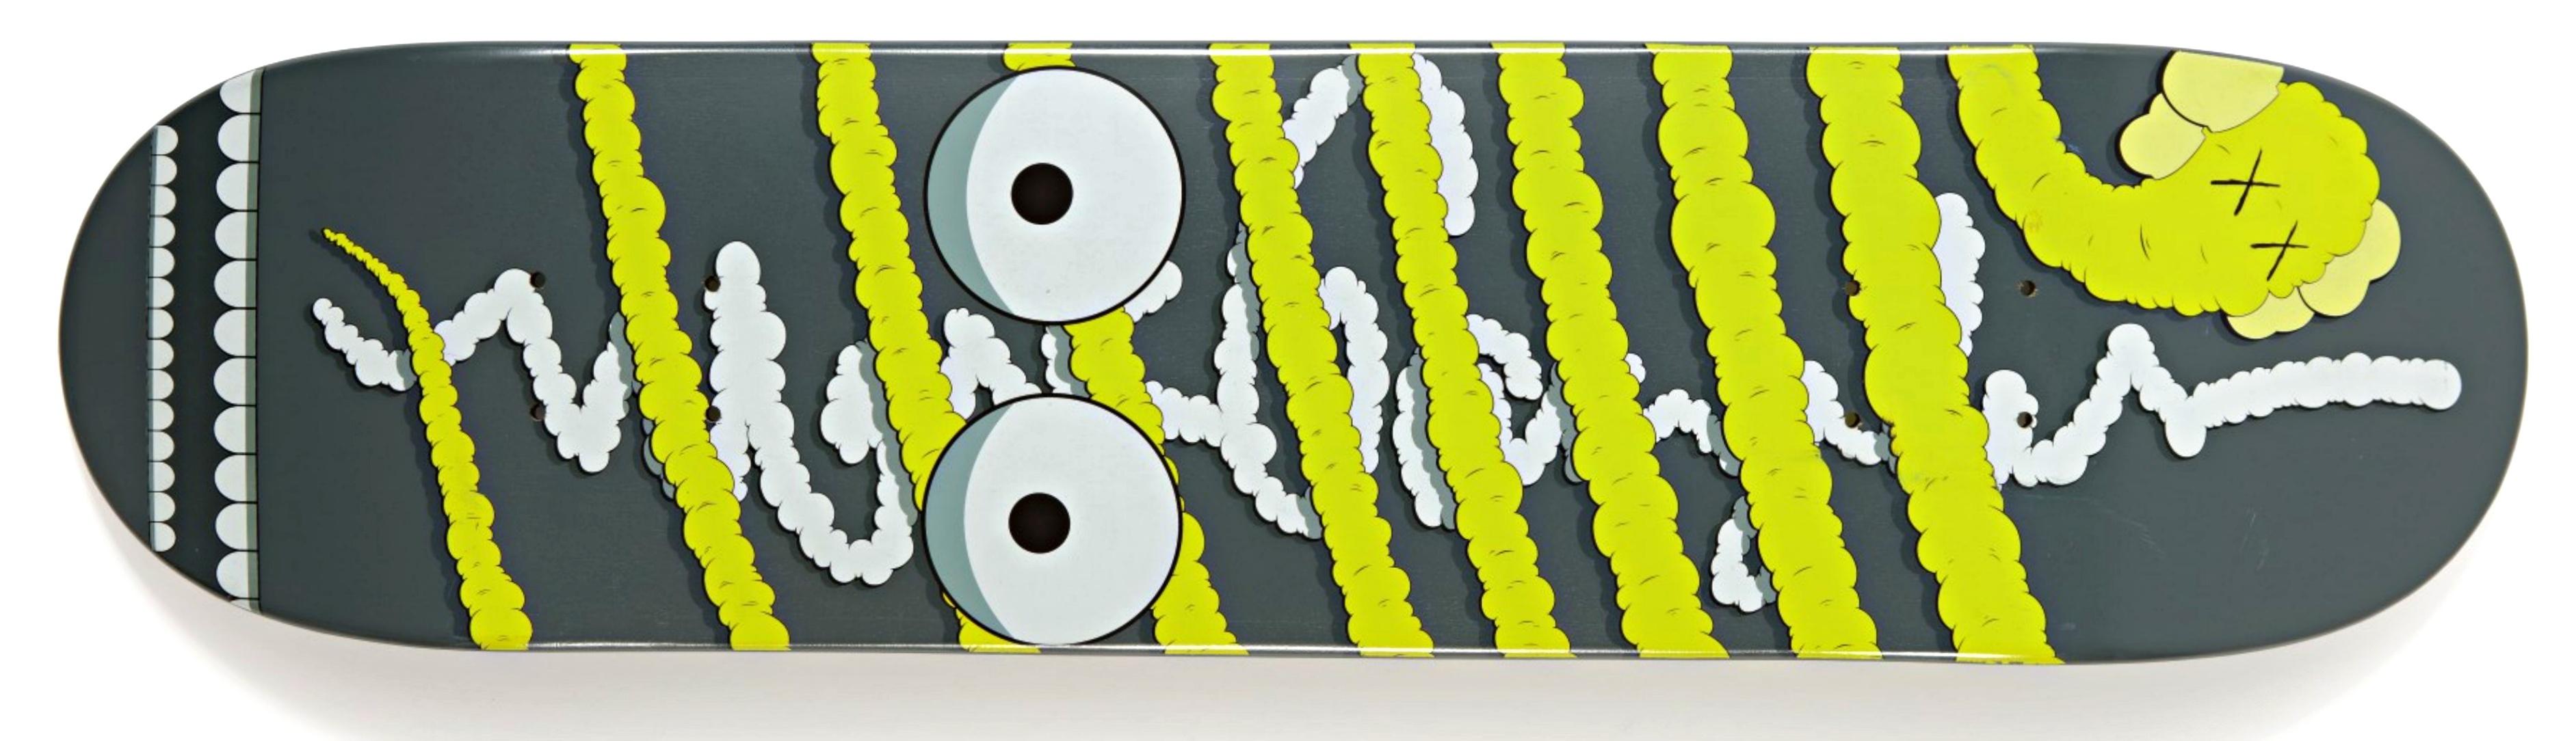 Yellow Snake skateboard, hand numbered 46/500 Street Art Pop Art skate deck LtEd - Print by KAWS